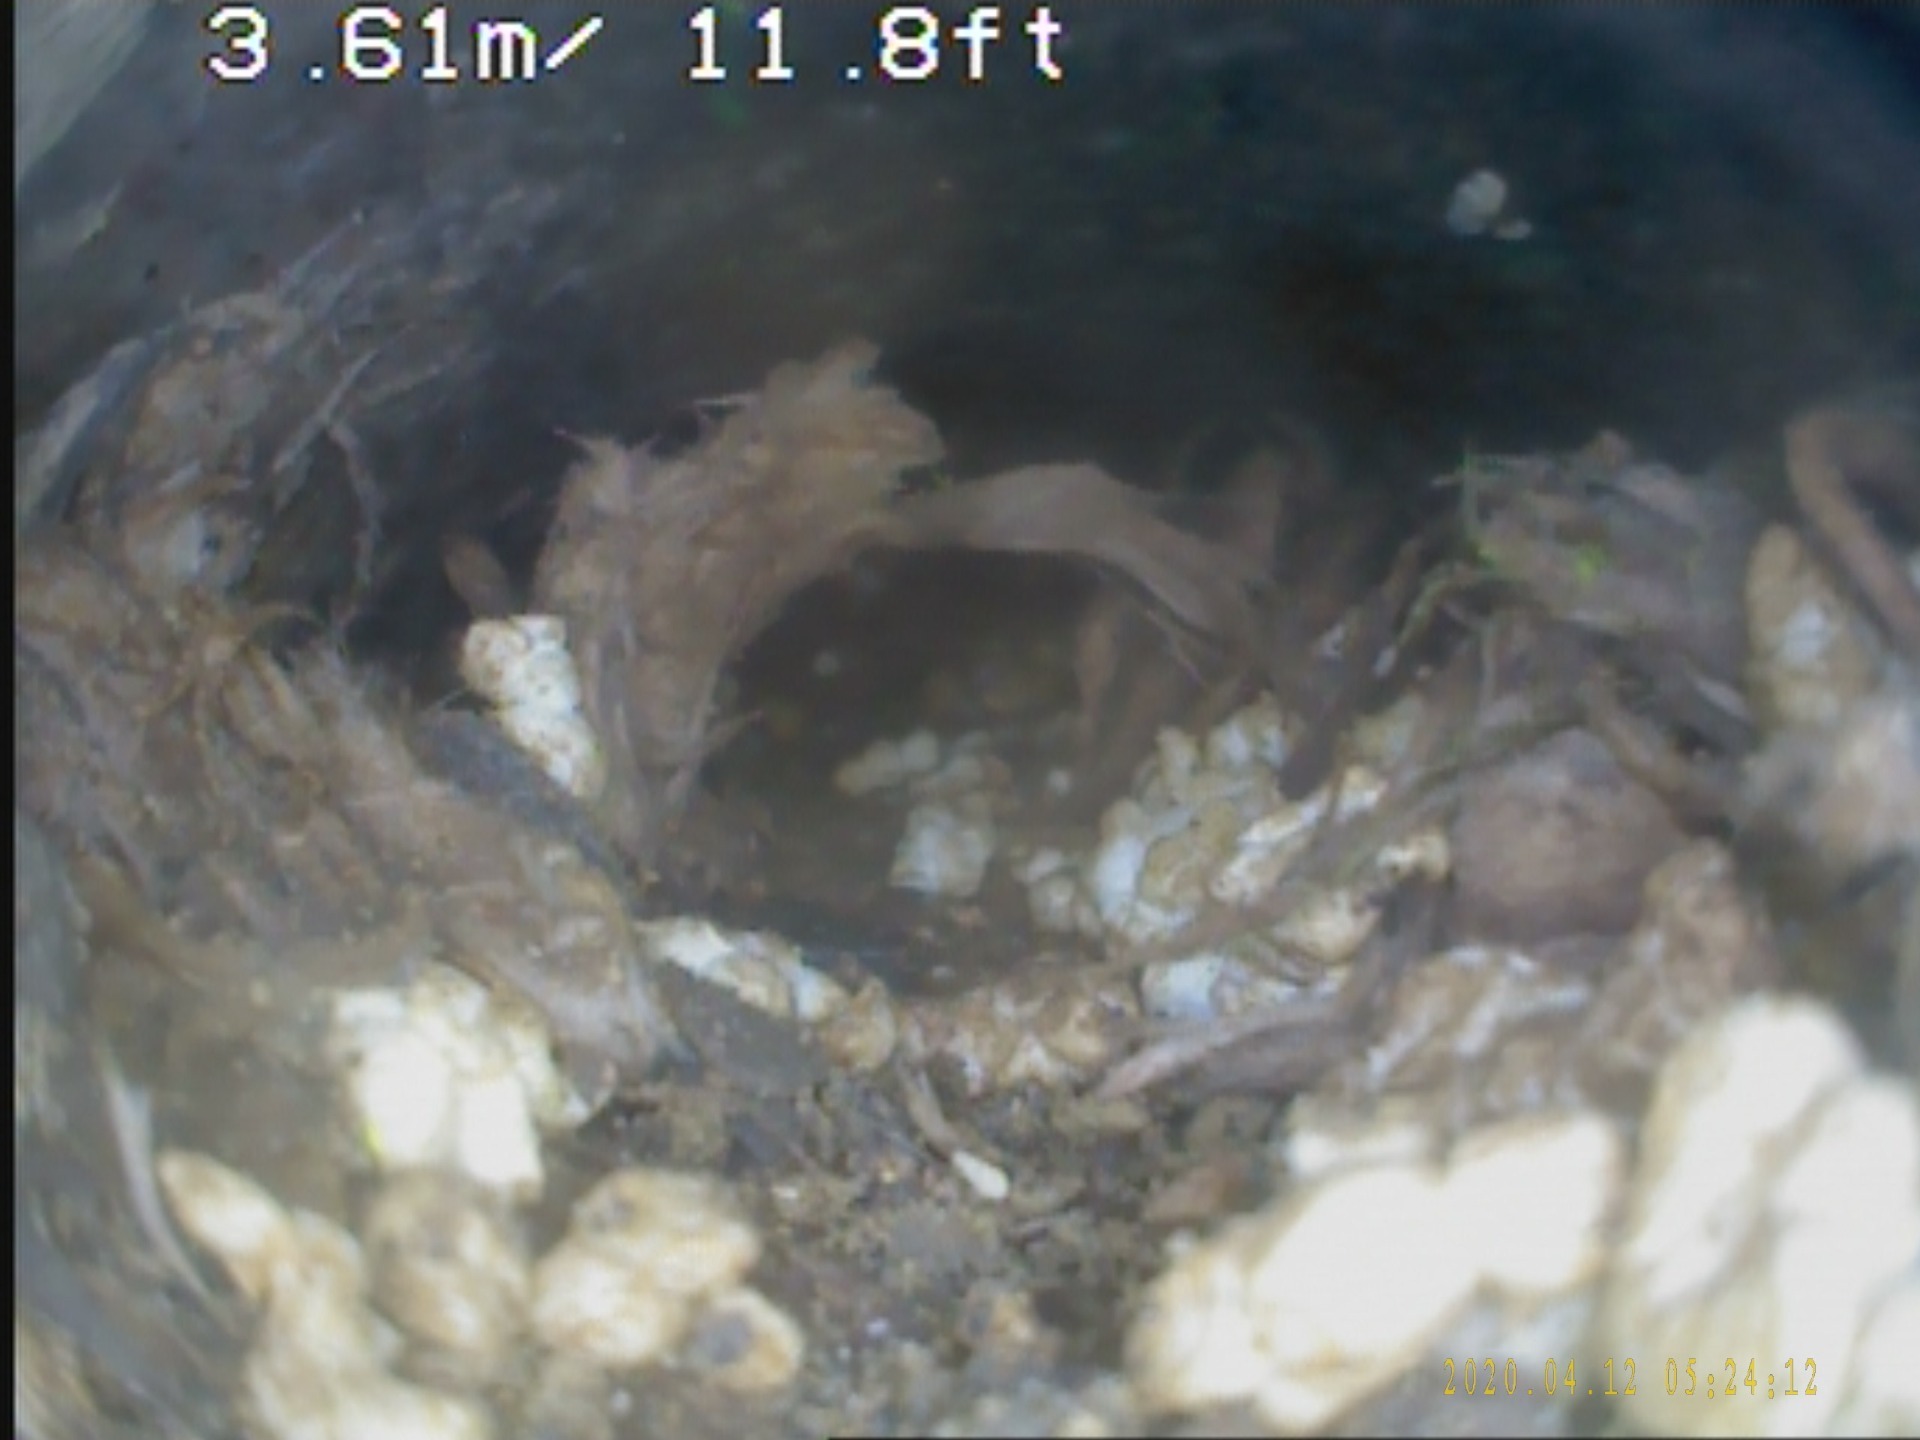 rats nest inside a drain